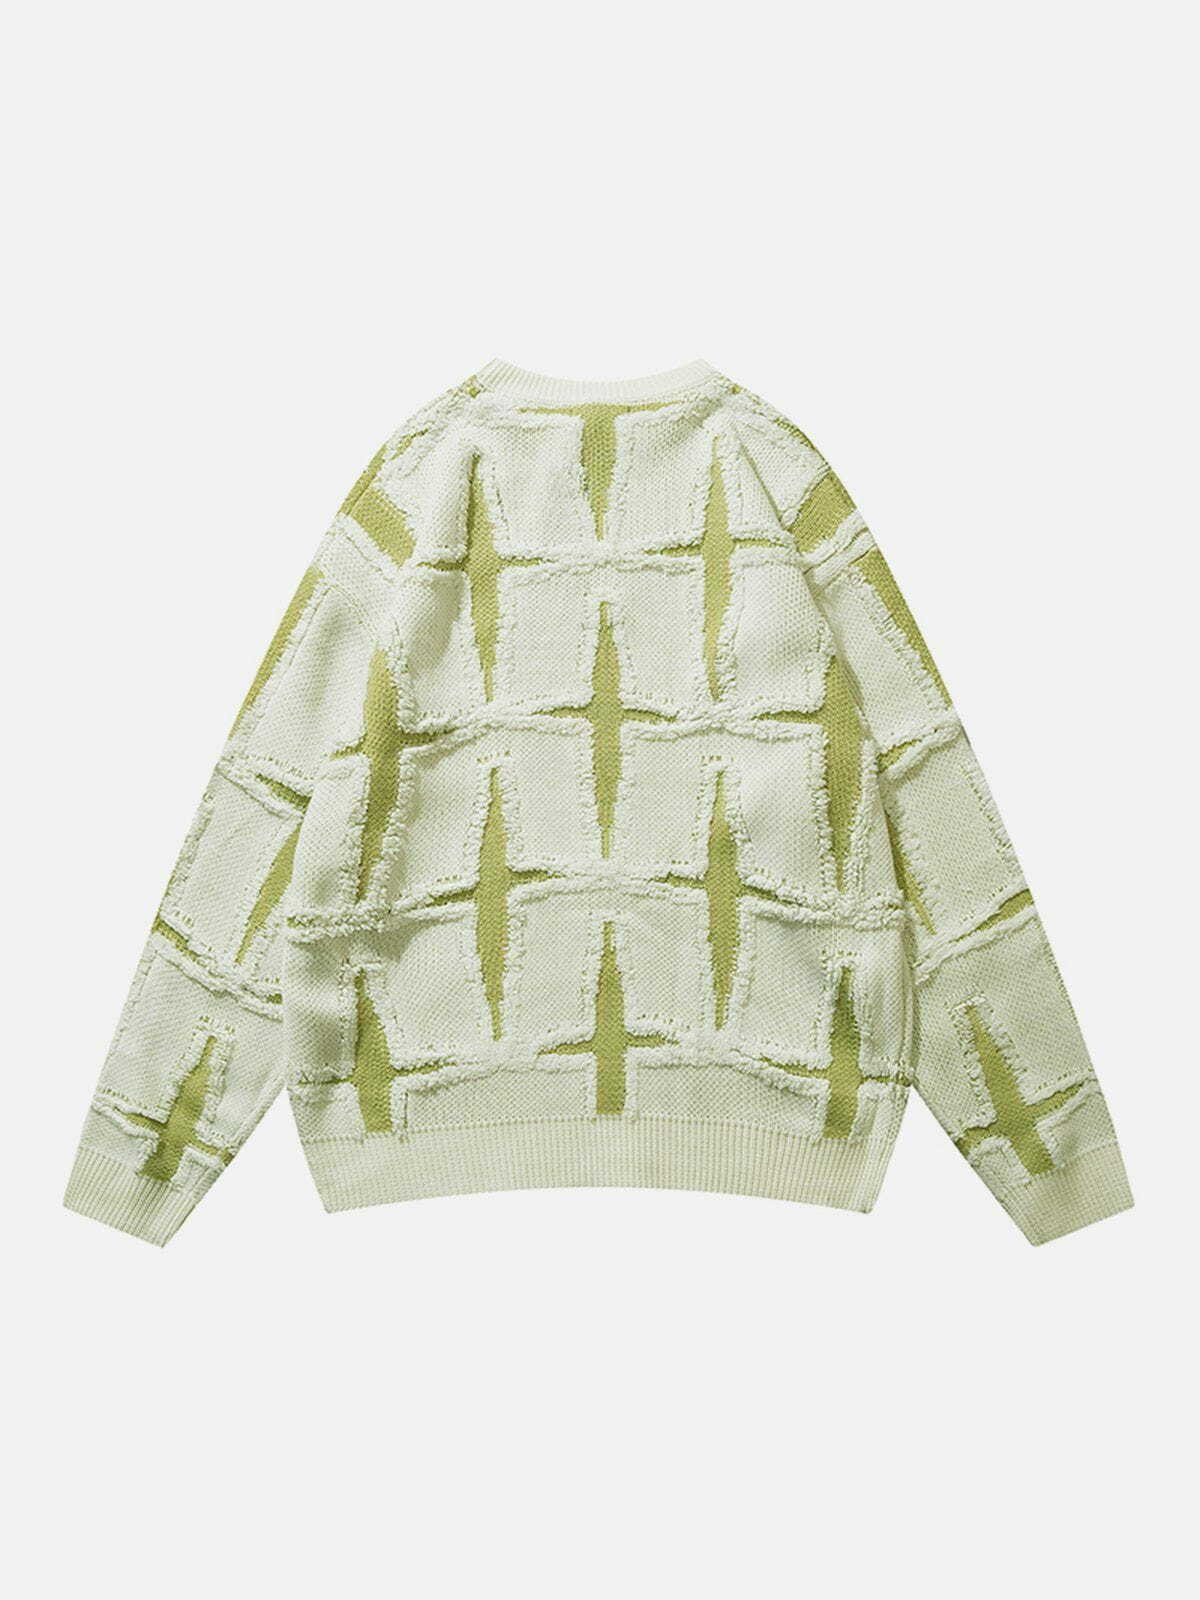 chic cross stitch sweater retro streetwear essential 7942